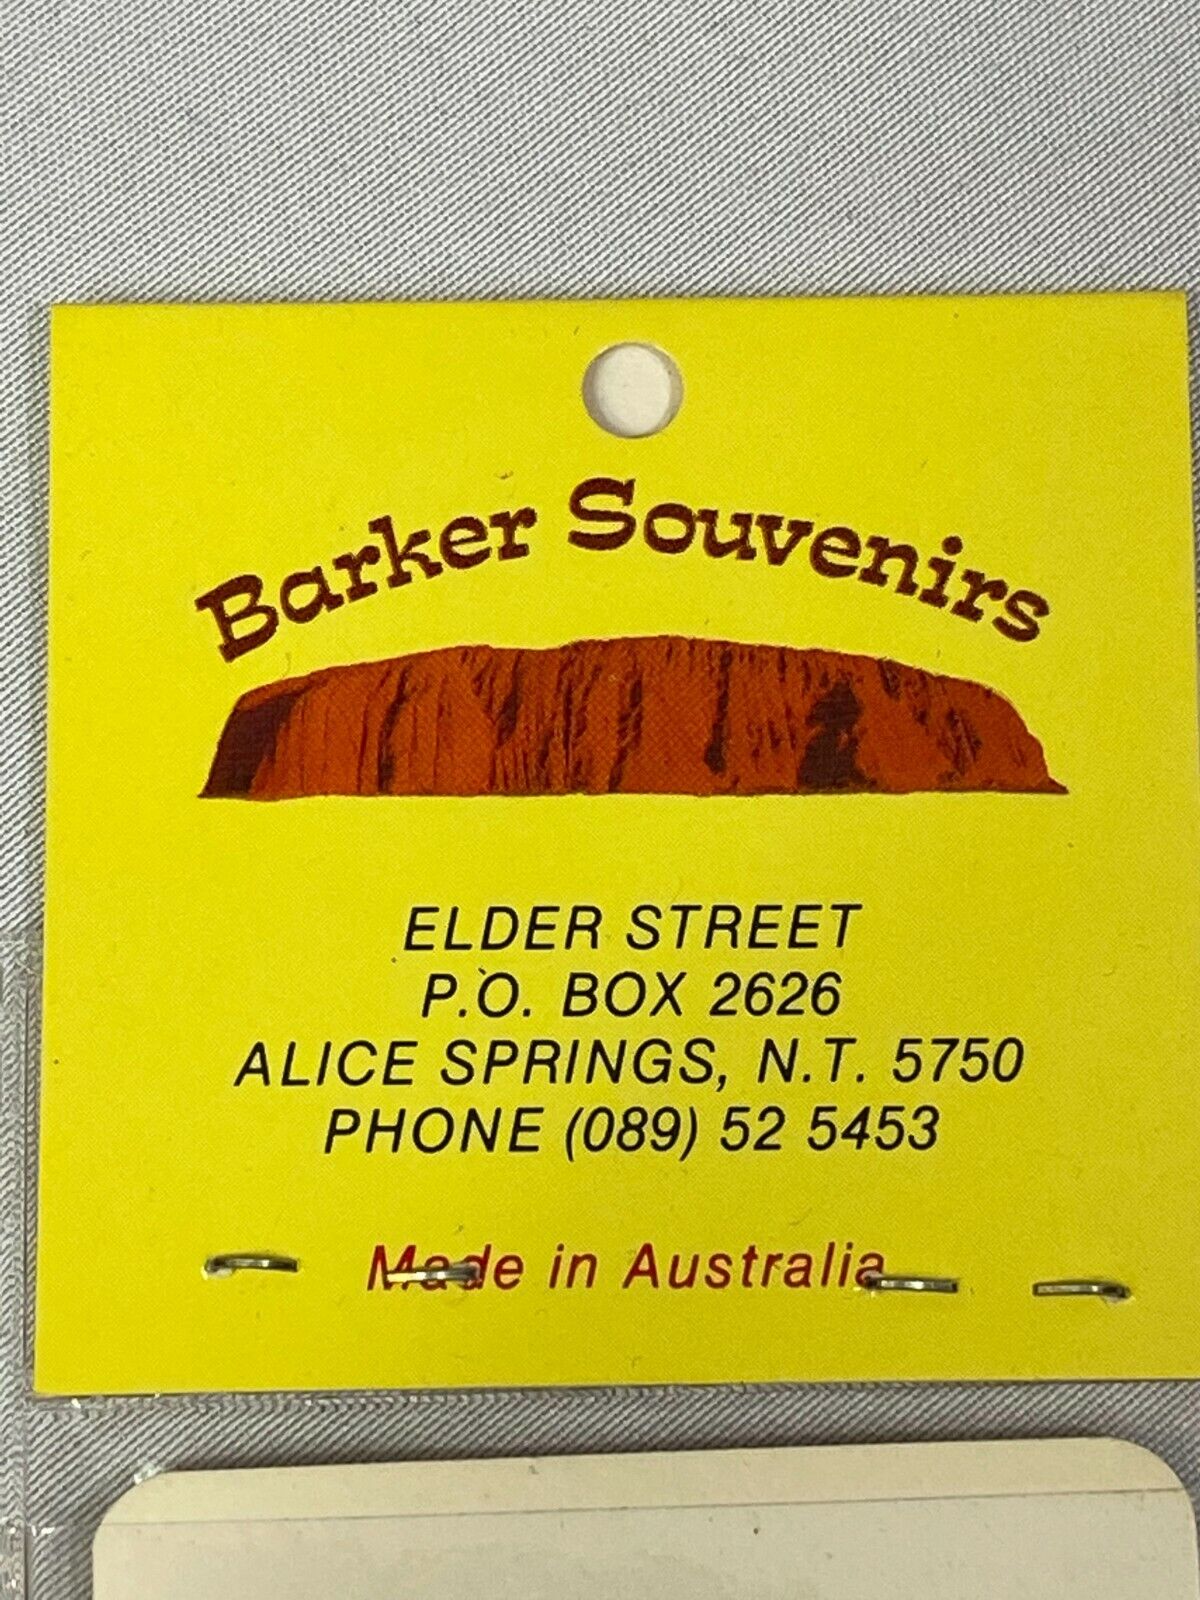 6 Barker Souvenirs Scenic Slide Pack